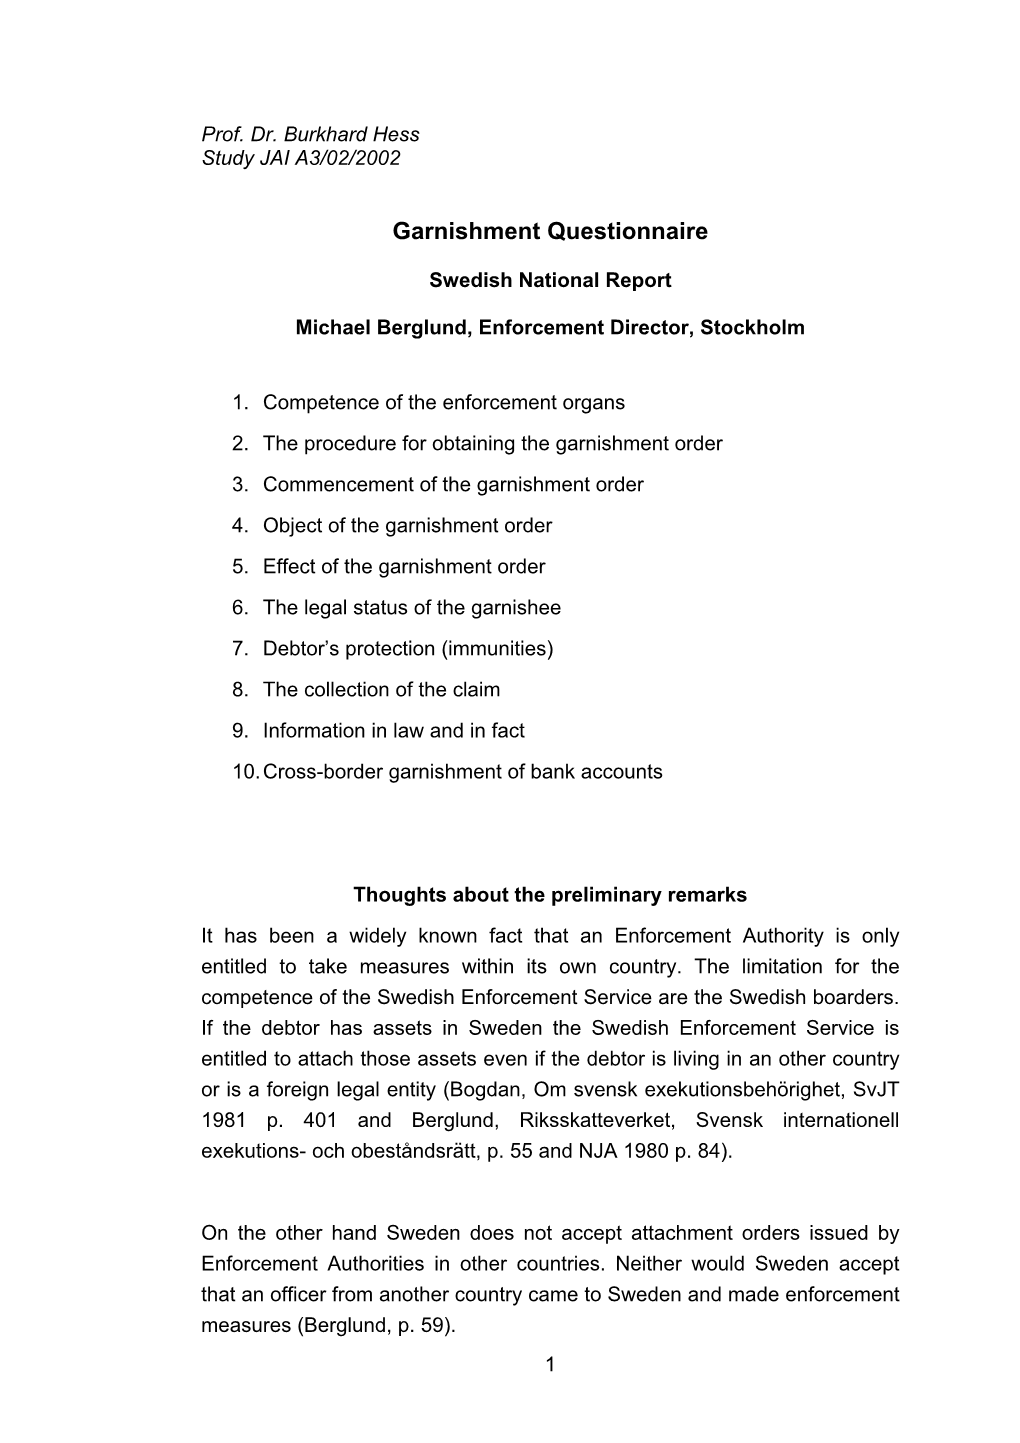 Garnishment Questionnaire